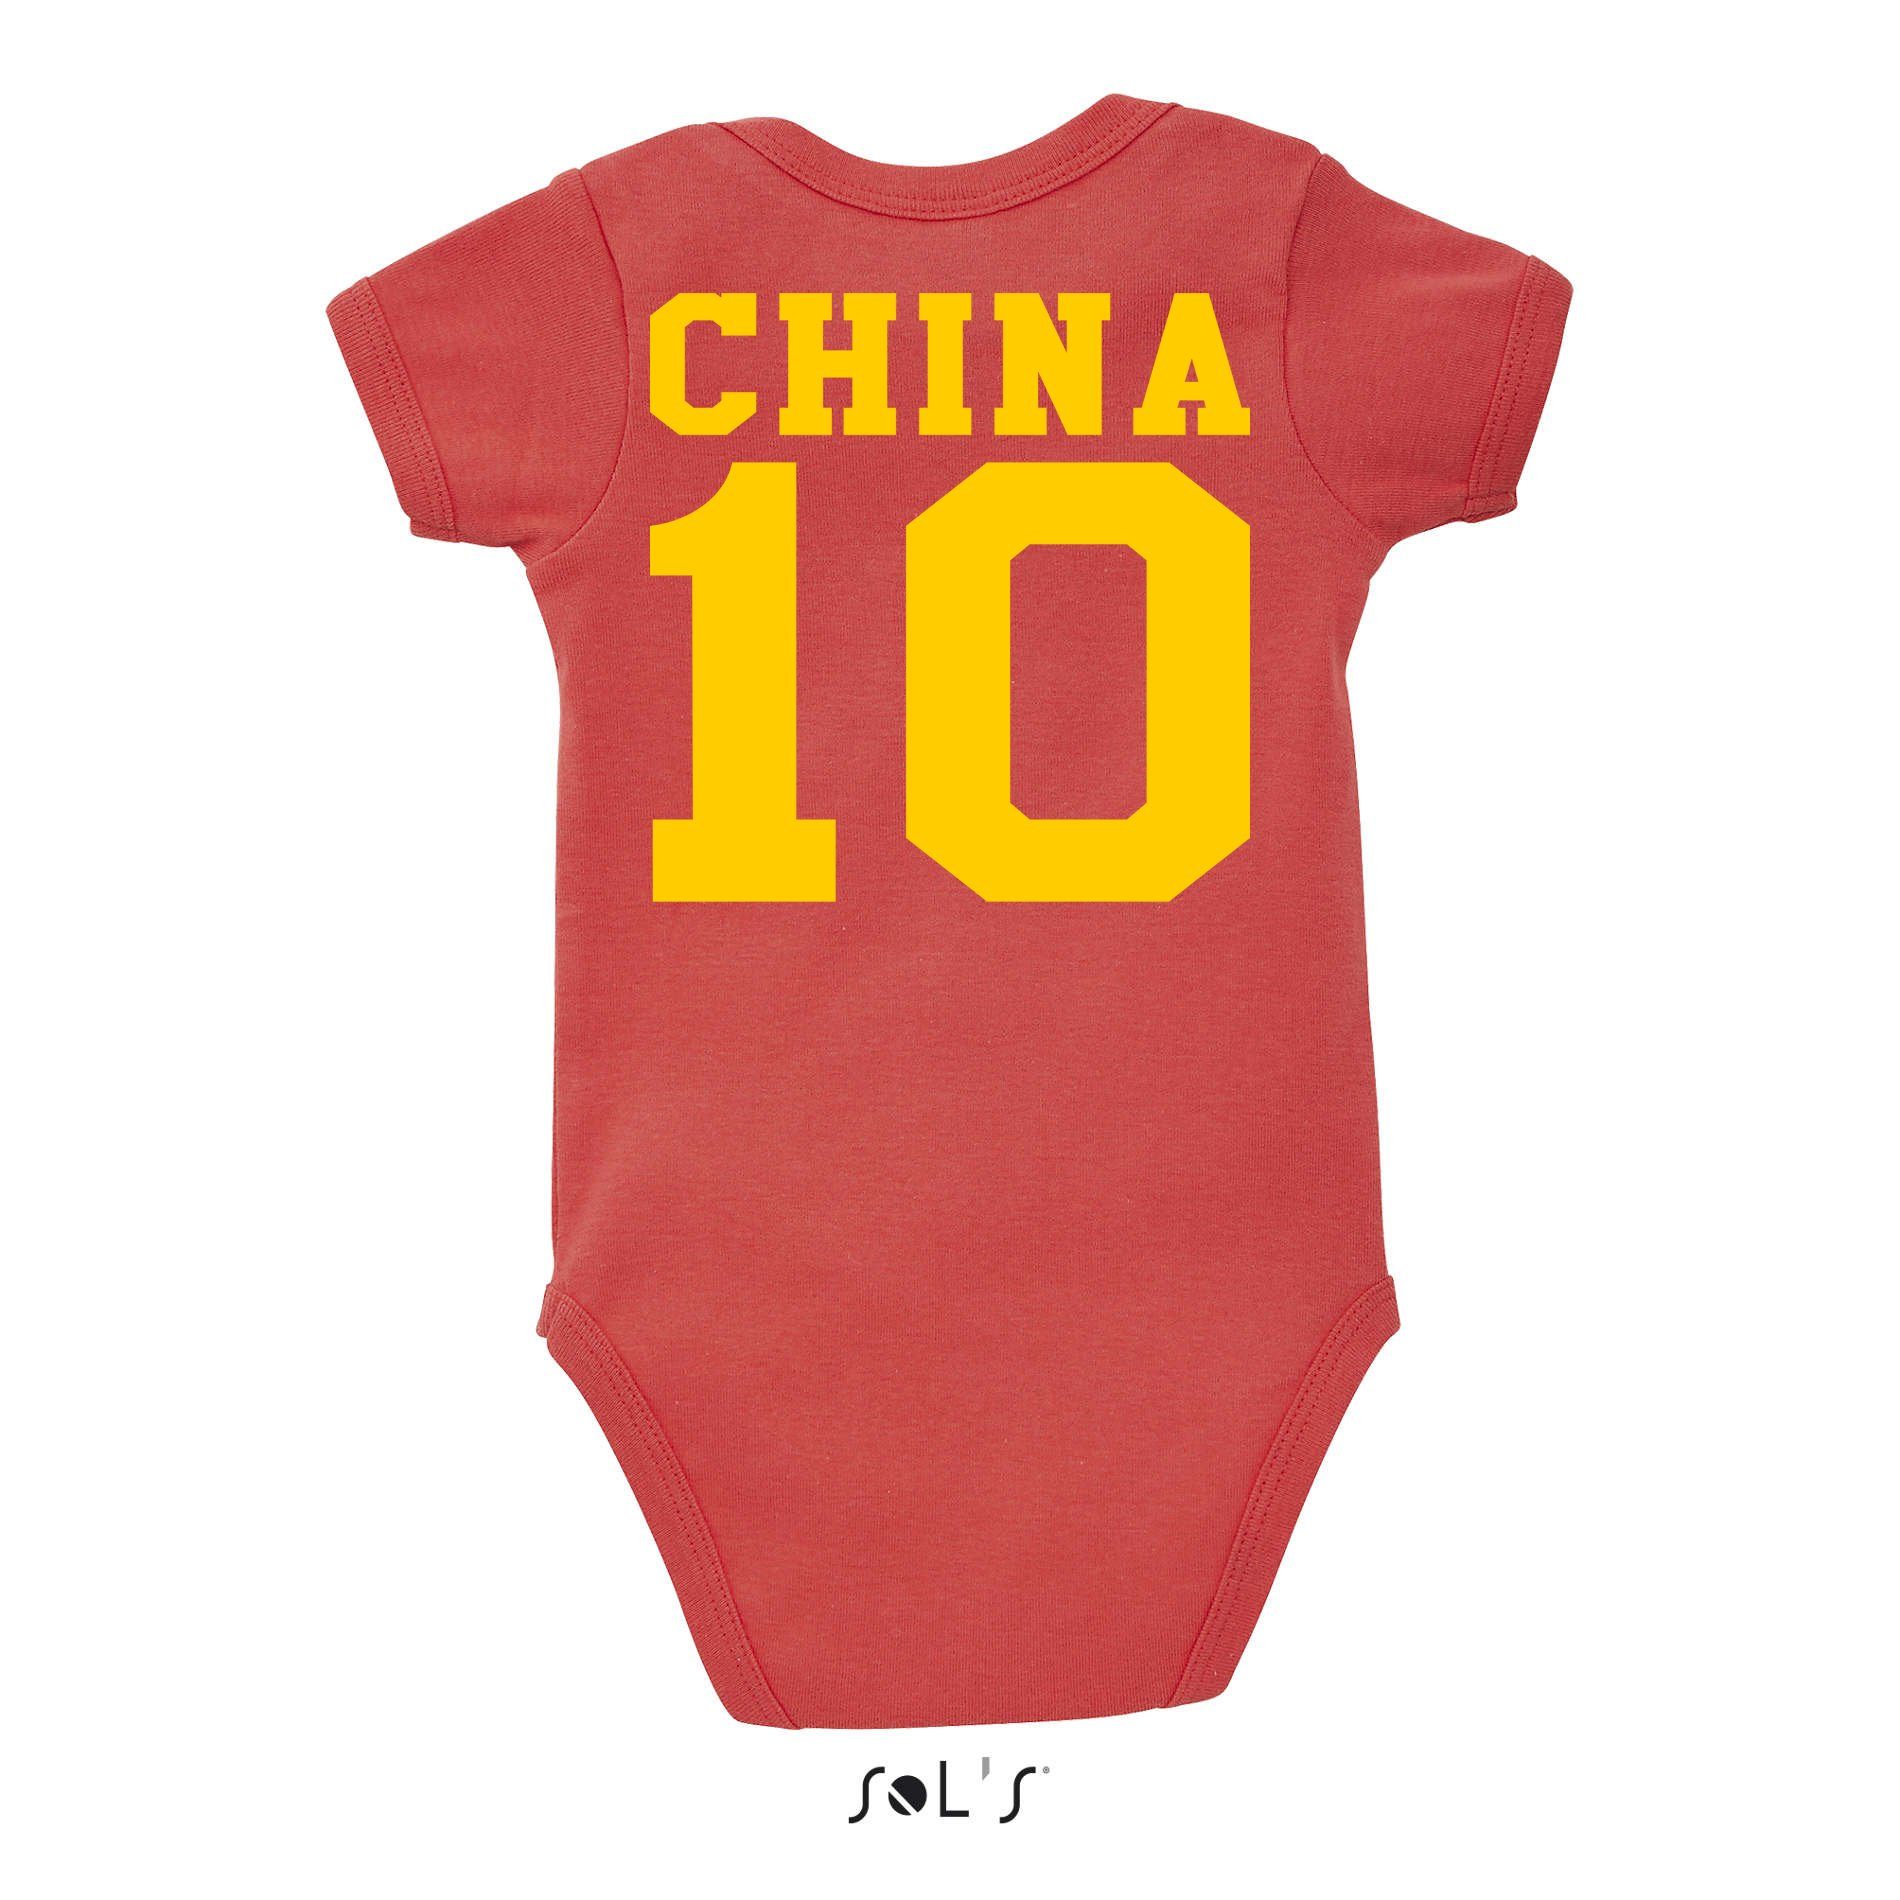 Sport China Trikot Weltmeister Meister Kinder WM Asien Brownie & Blondie Fußball Strampler Baby